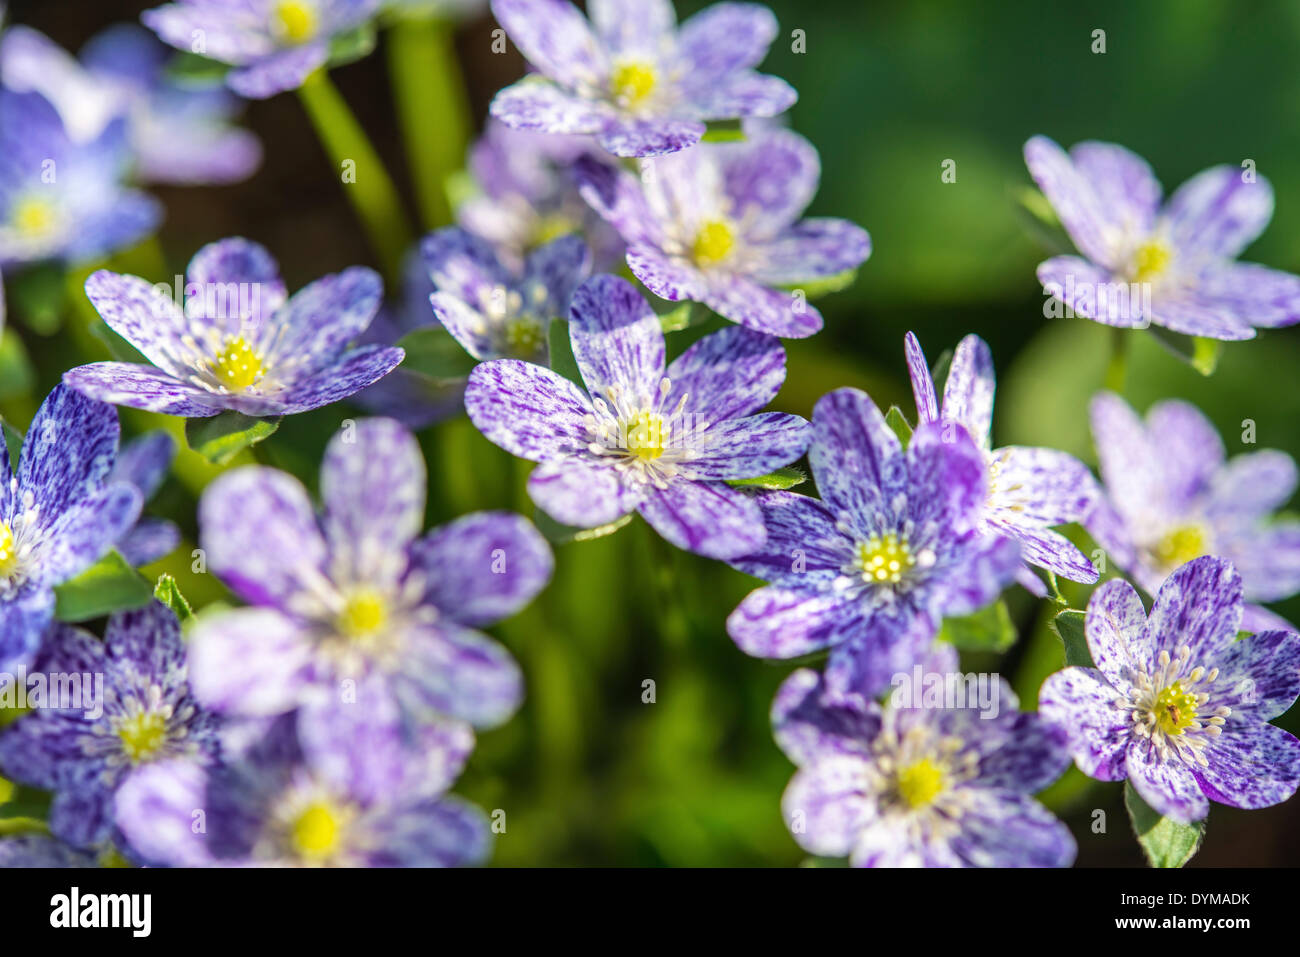 Purple-white speckled Hepatica or Liverwort (Hepatica), cultivar, close-up Stock Photo